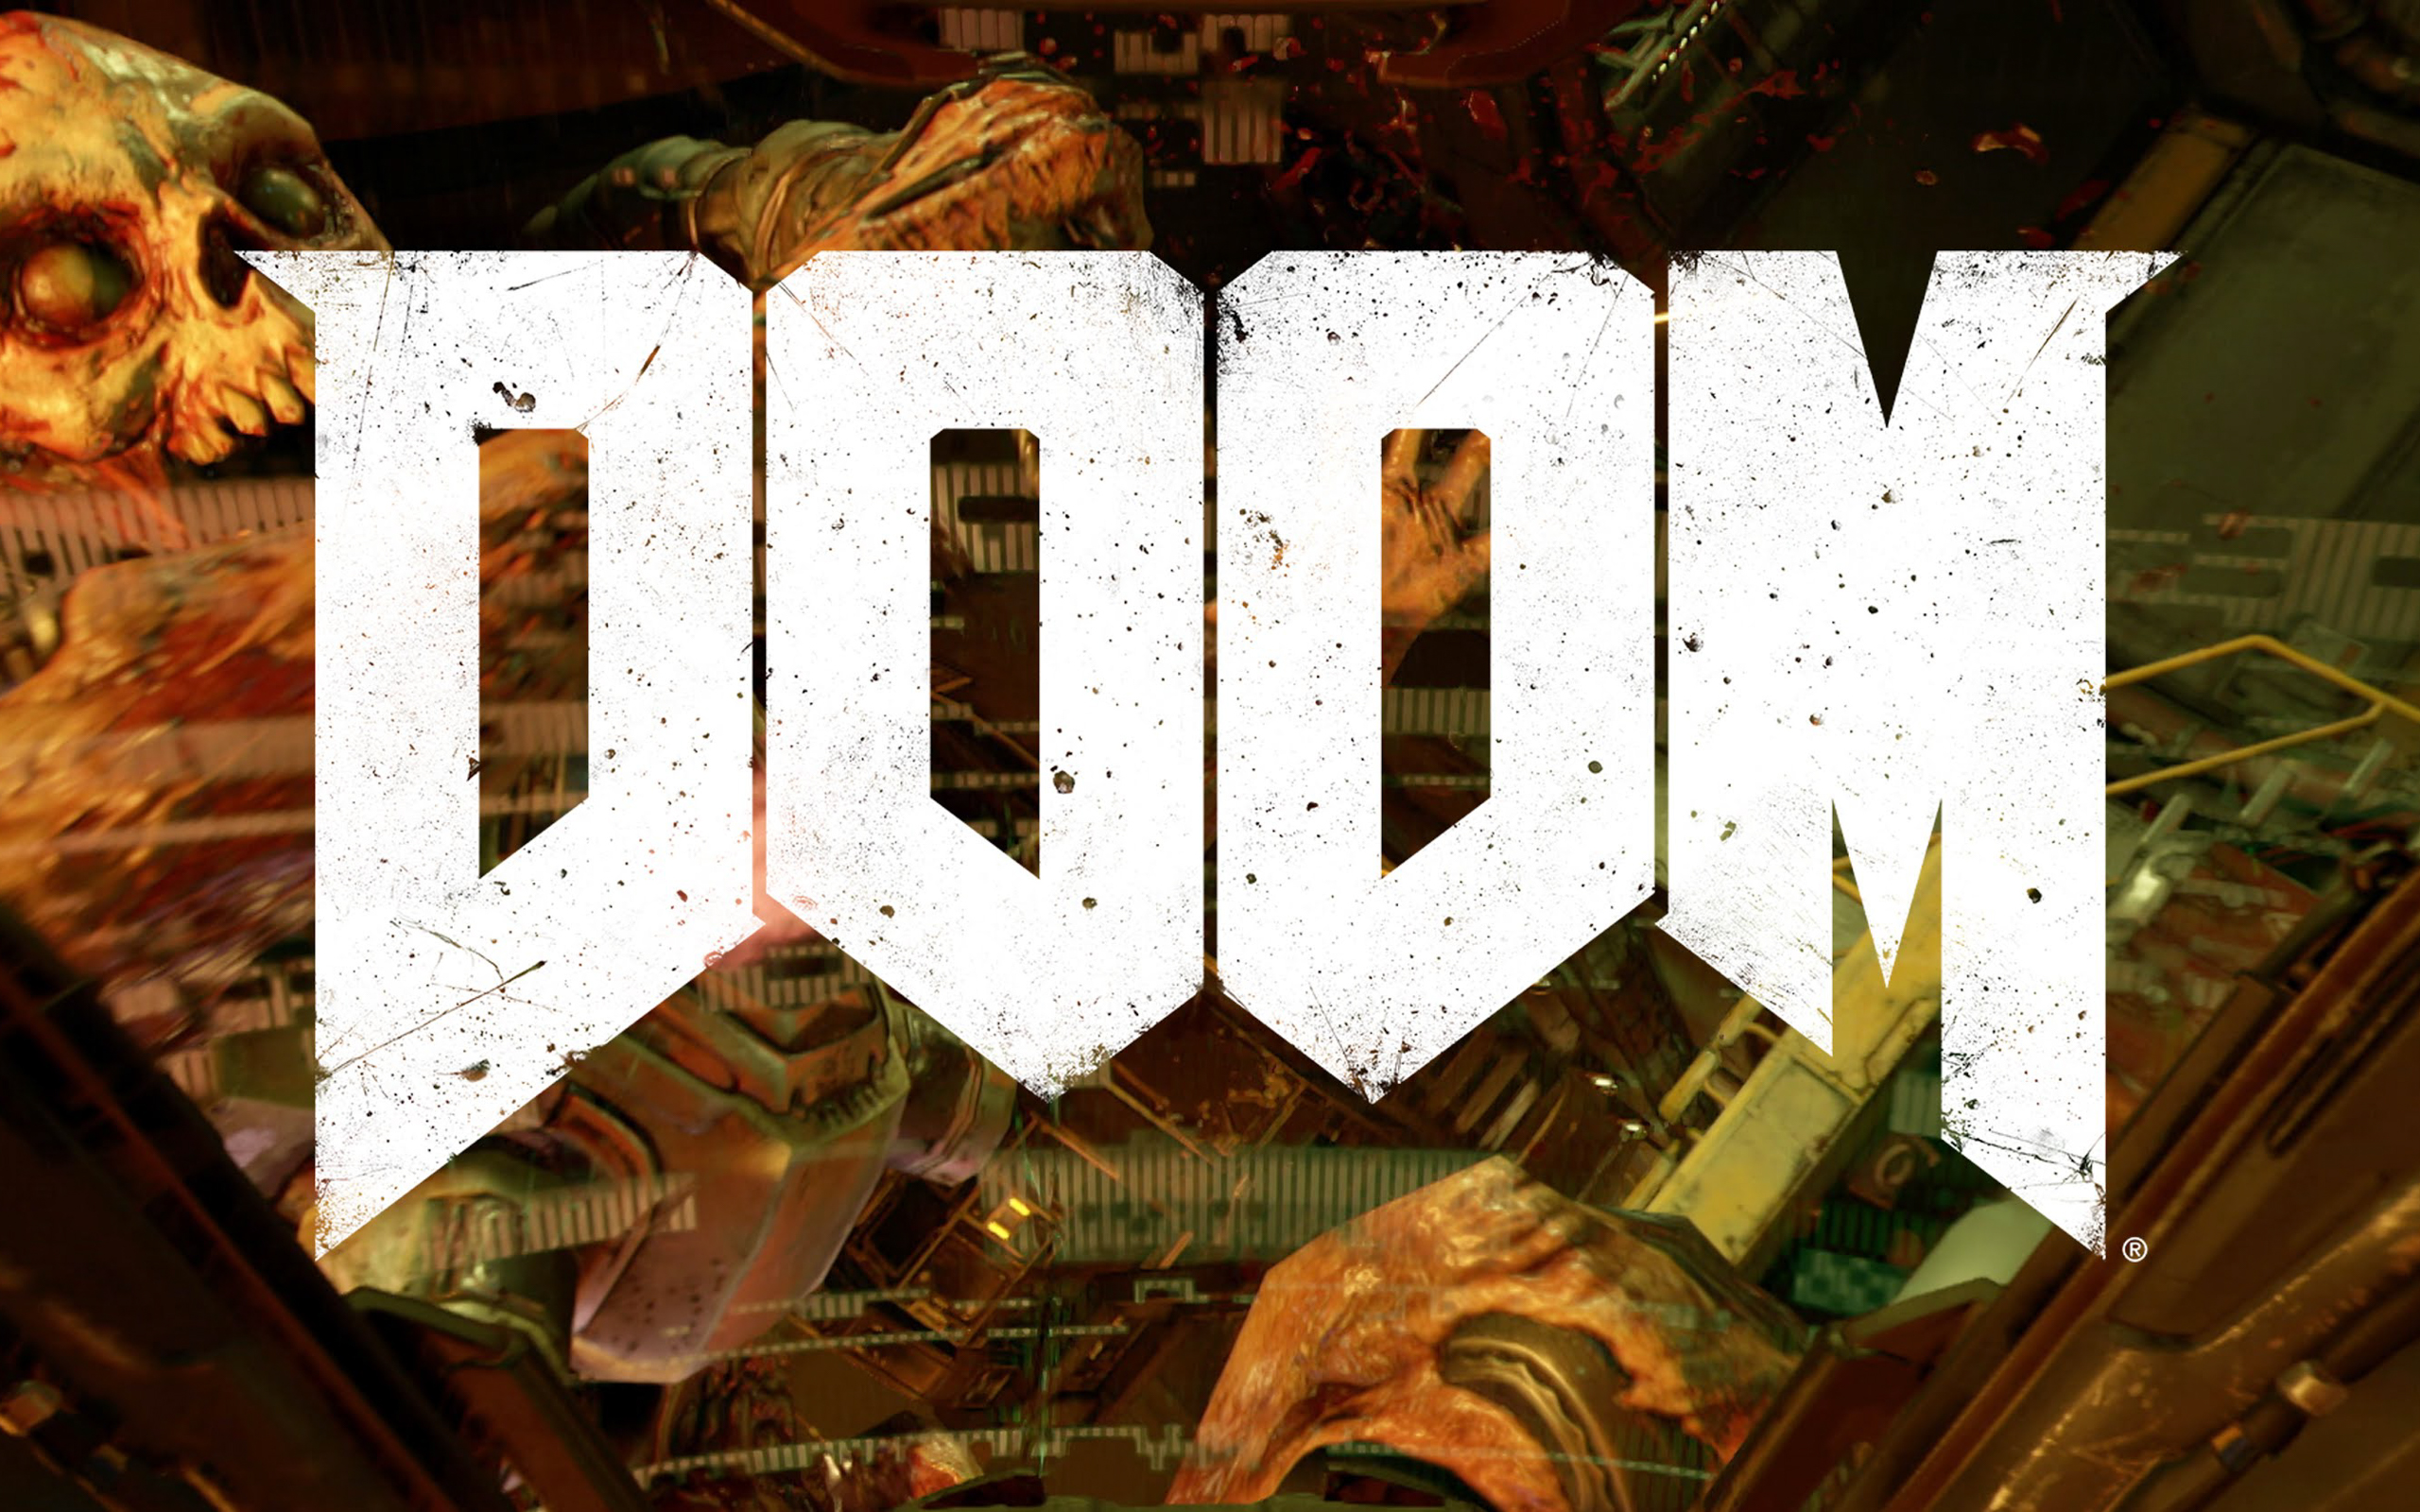 Video Game Doom HD Wallpaper | Background Image